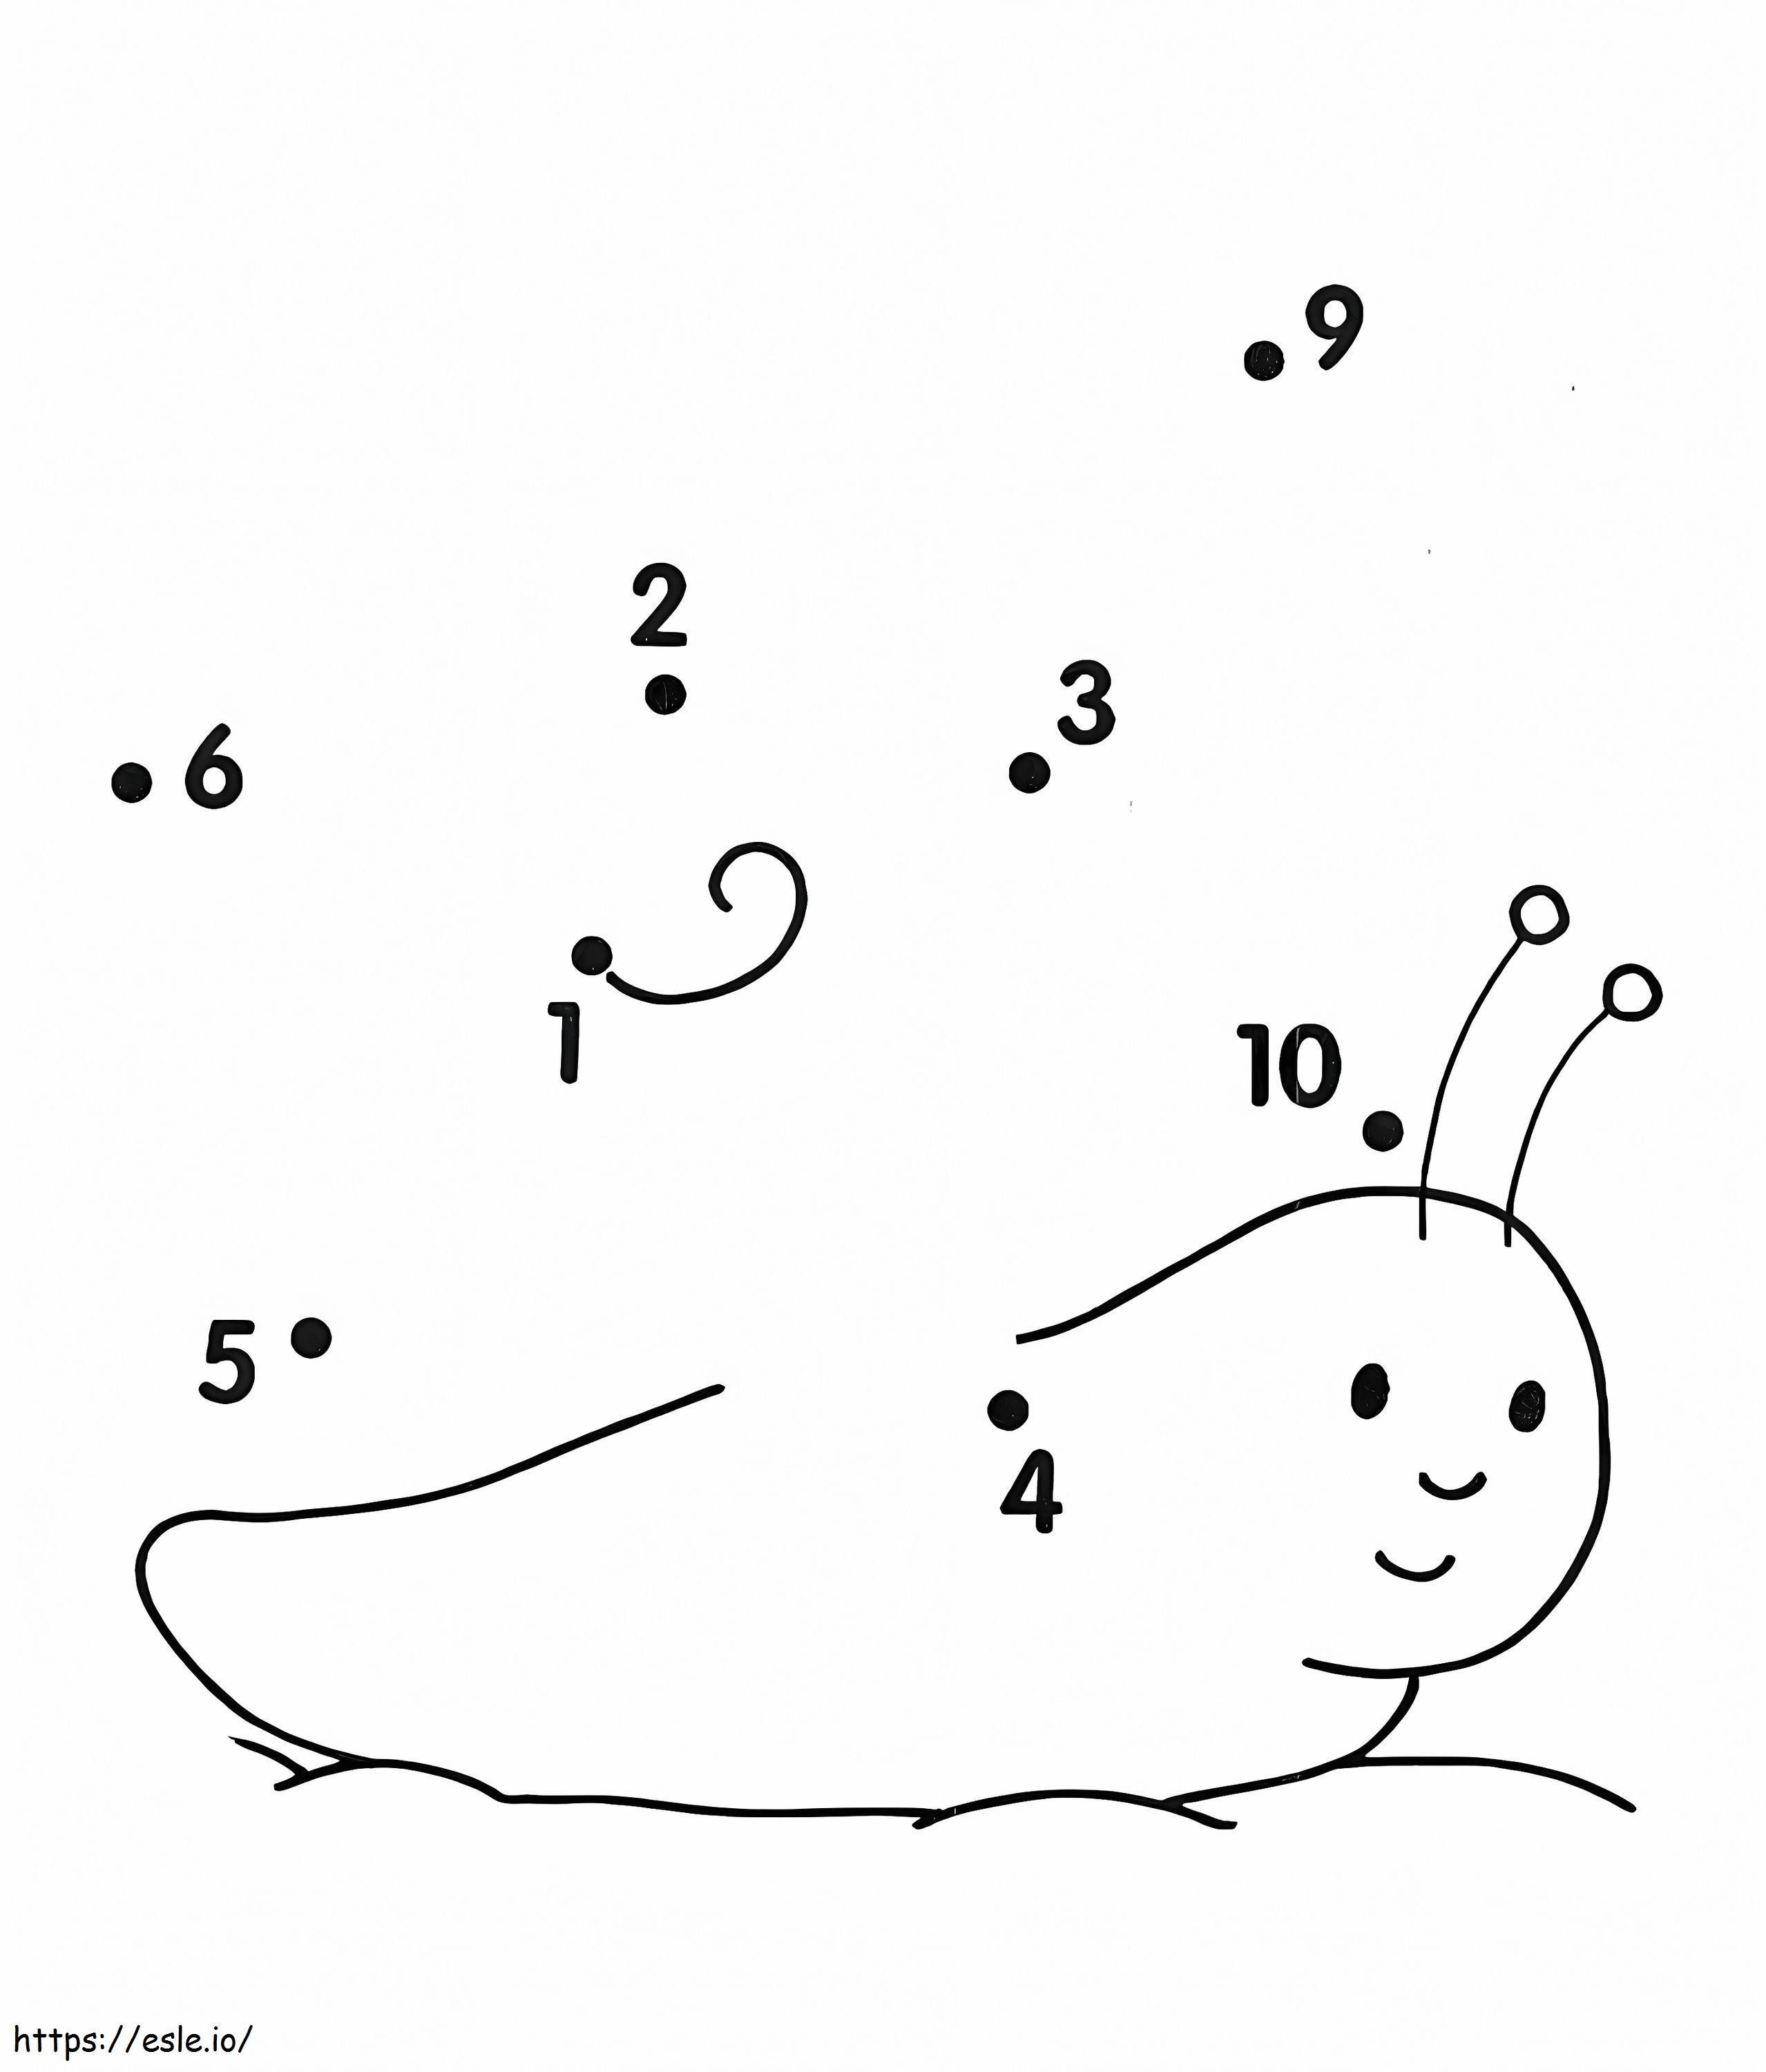  D Snail Dot To Arbeitsblätter Nummern 1 20 ausmalbilder